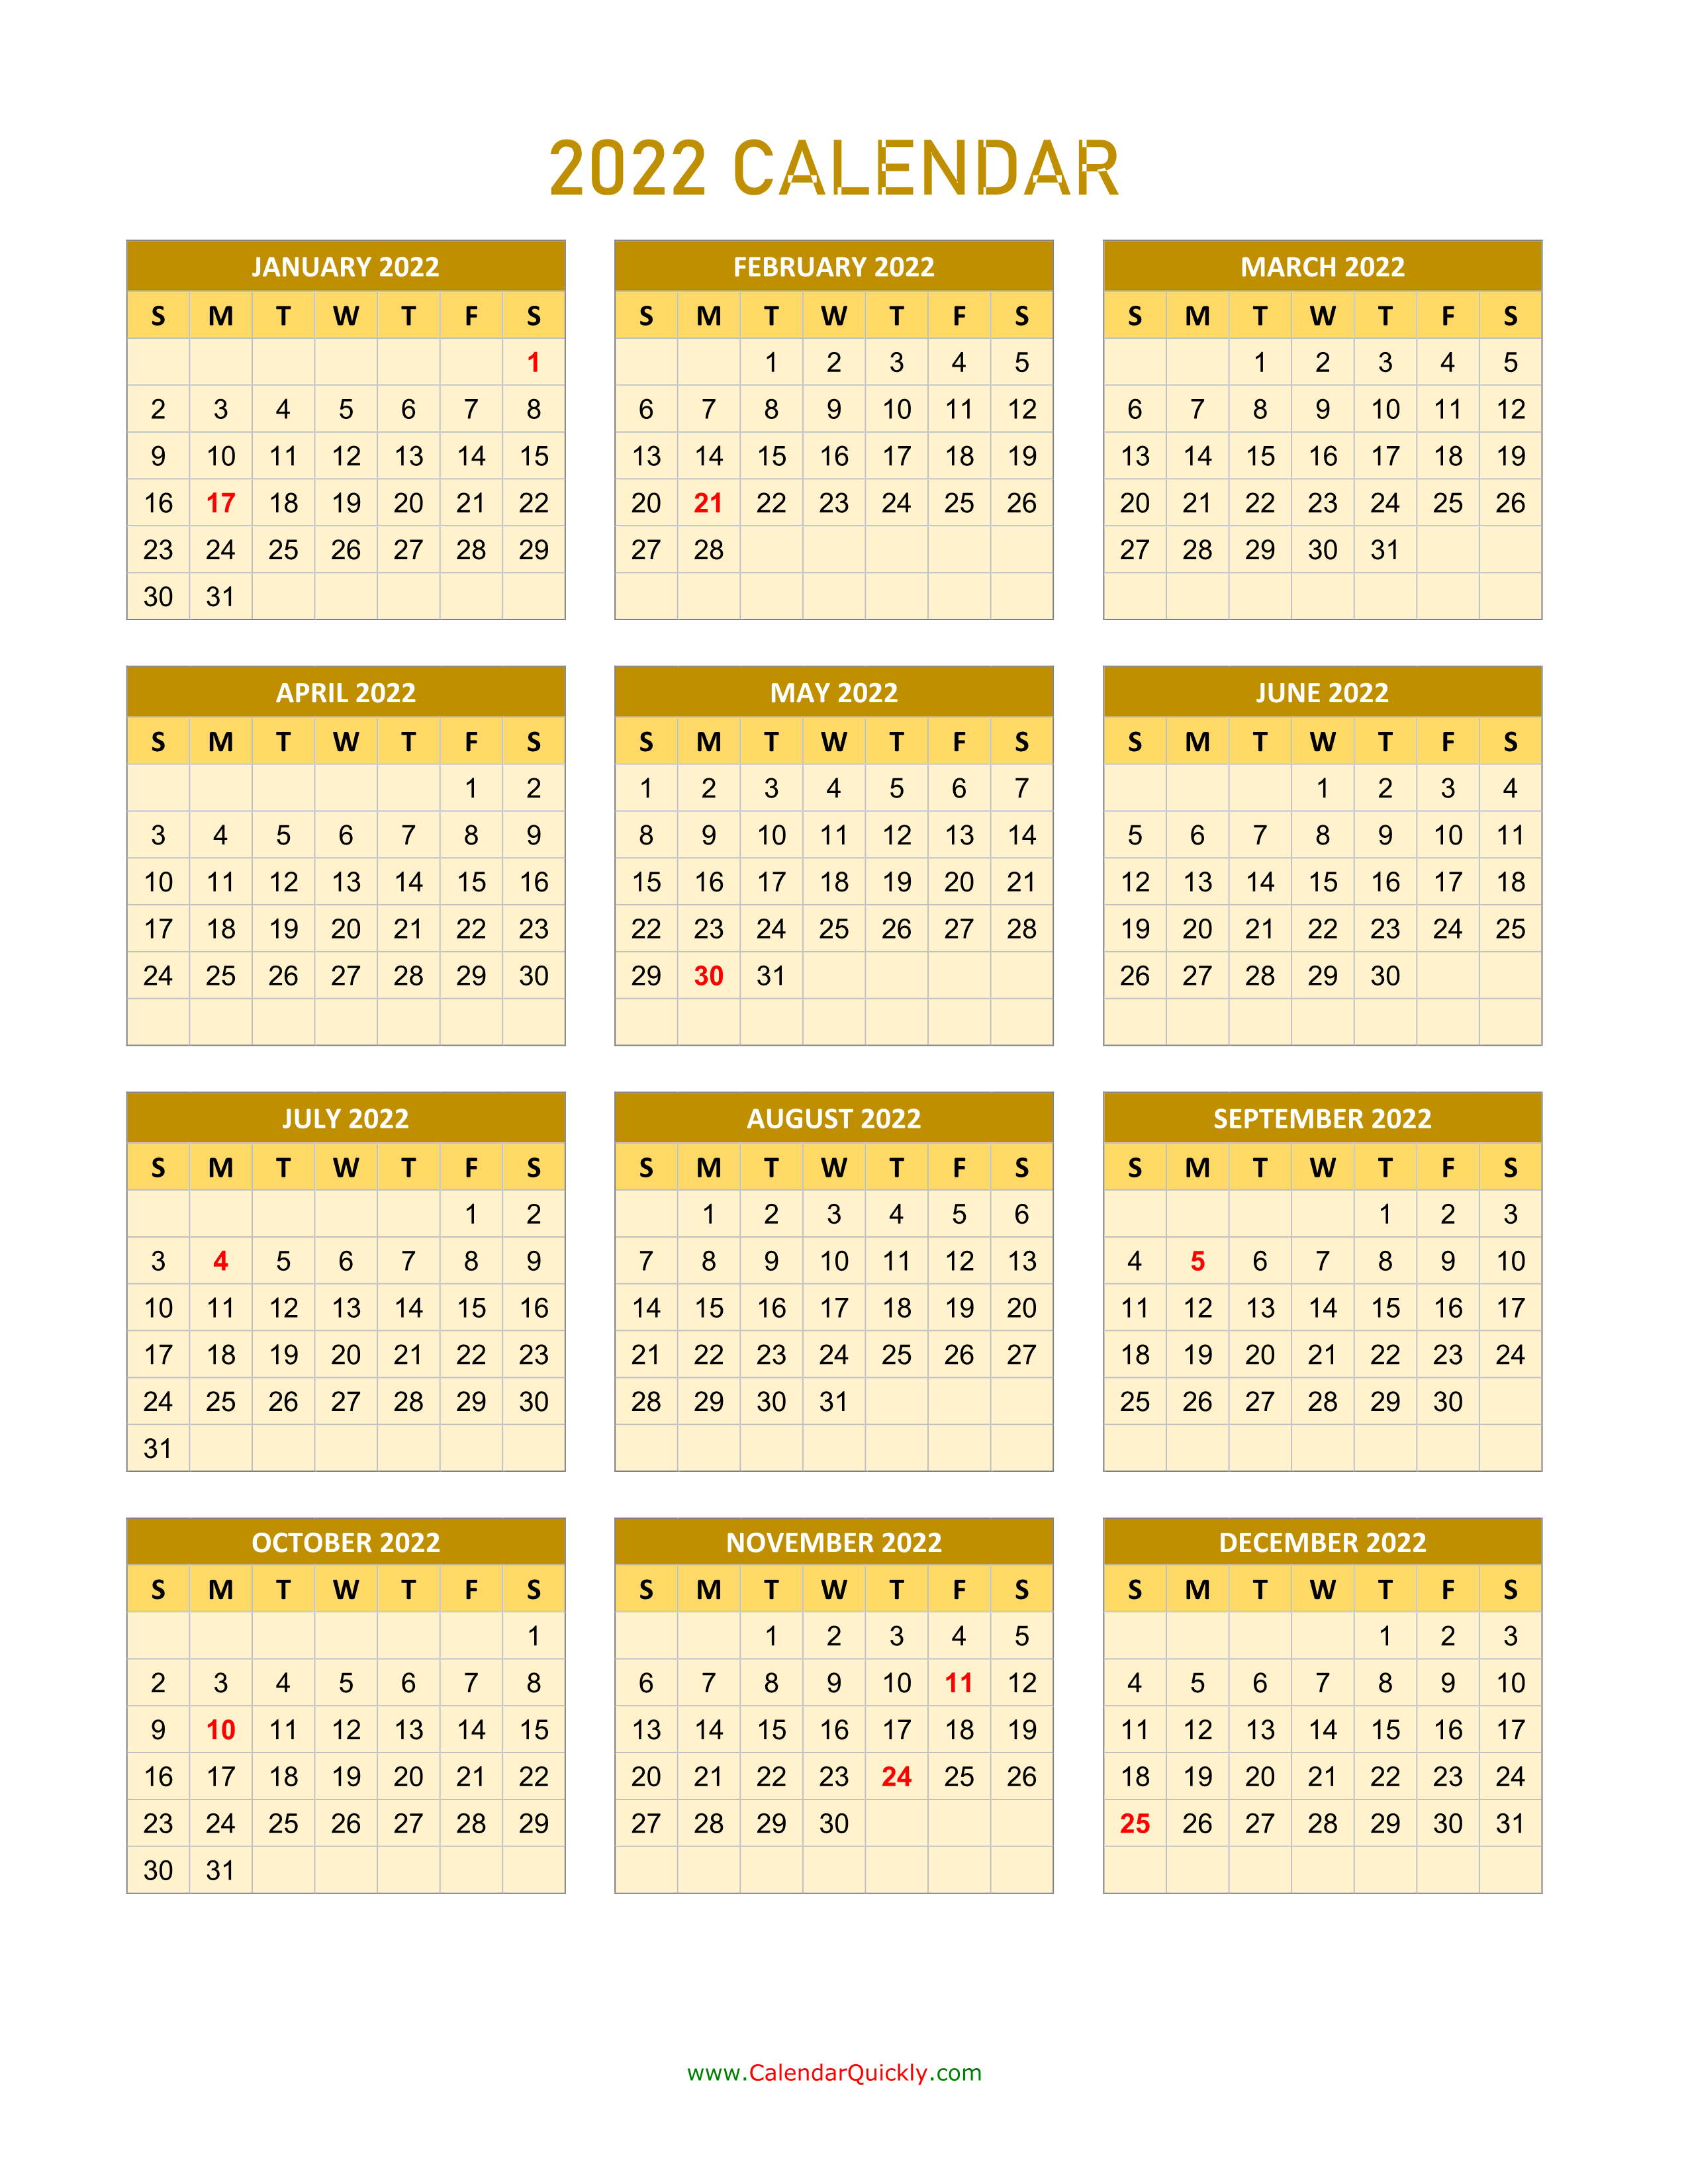 2022 Calendar Vertical Calendar Quickly